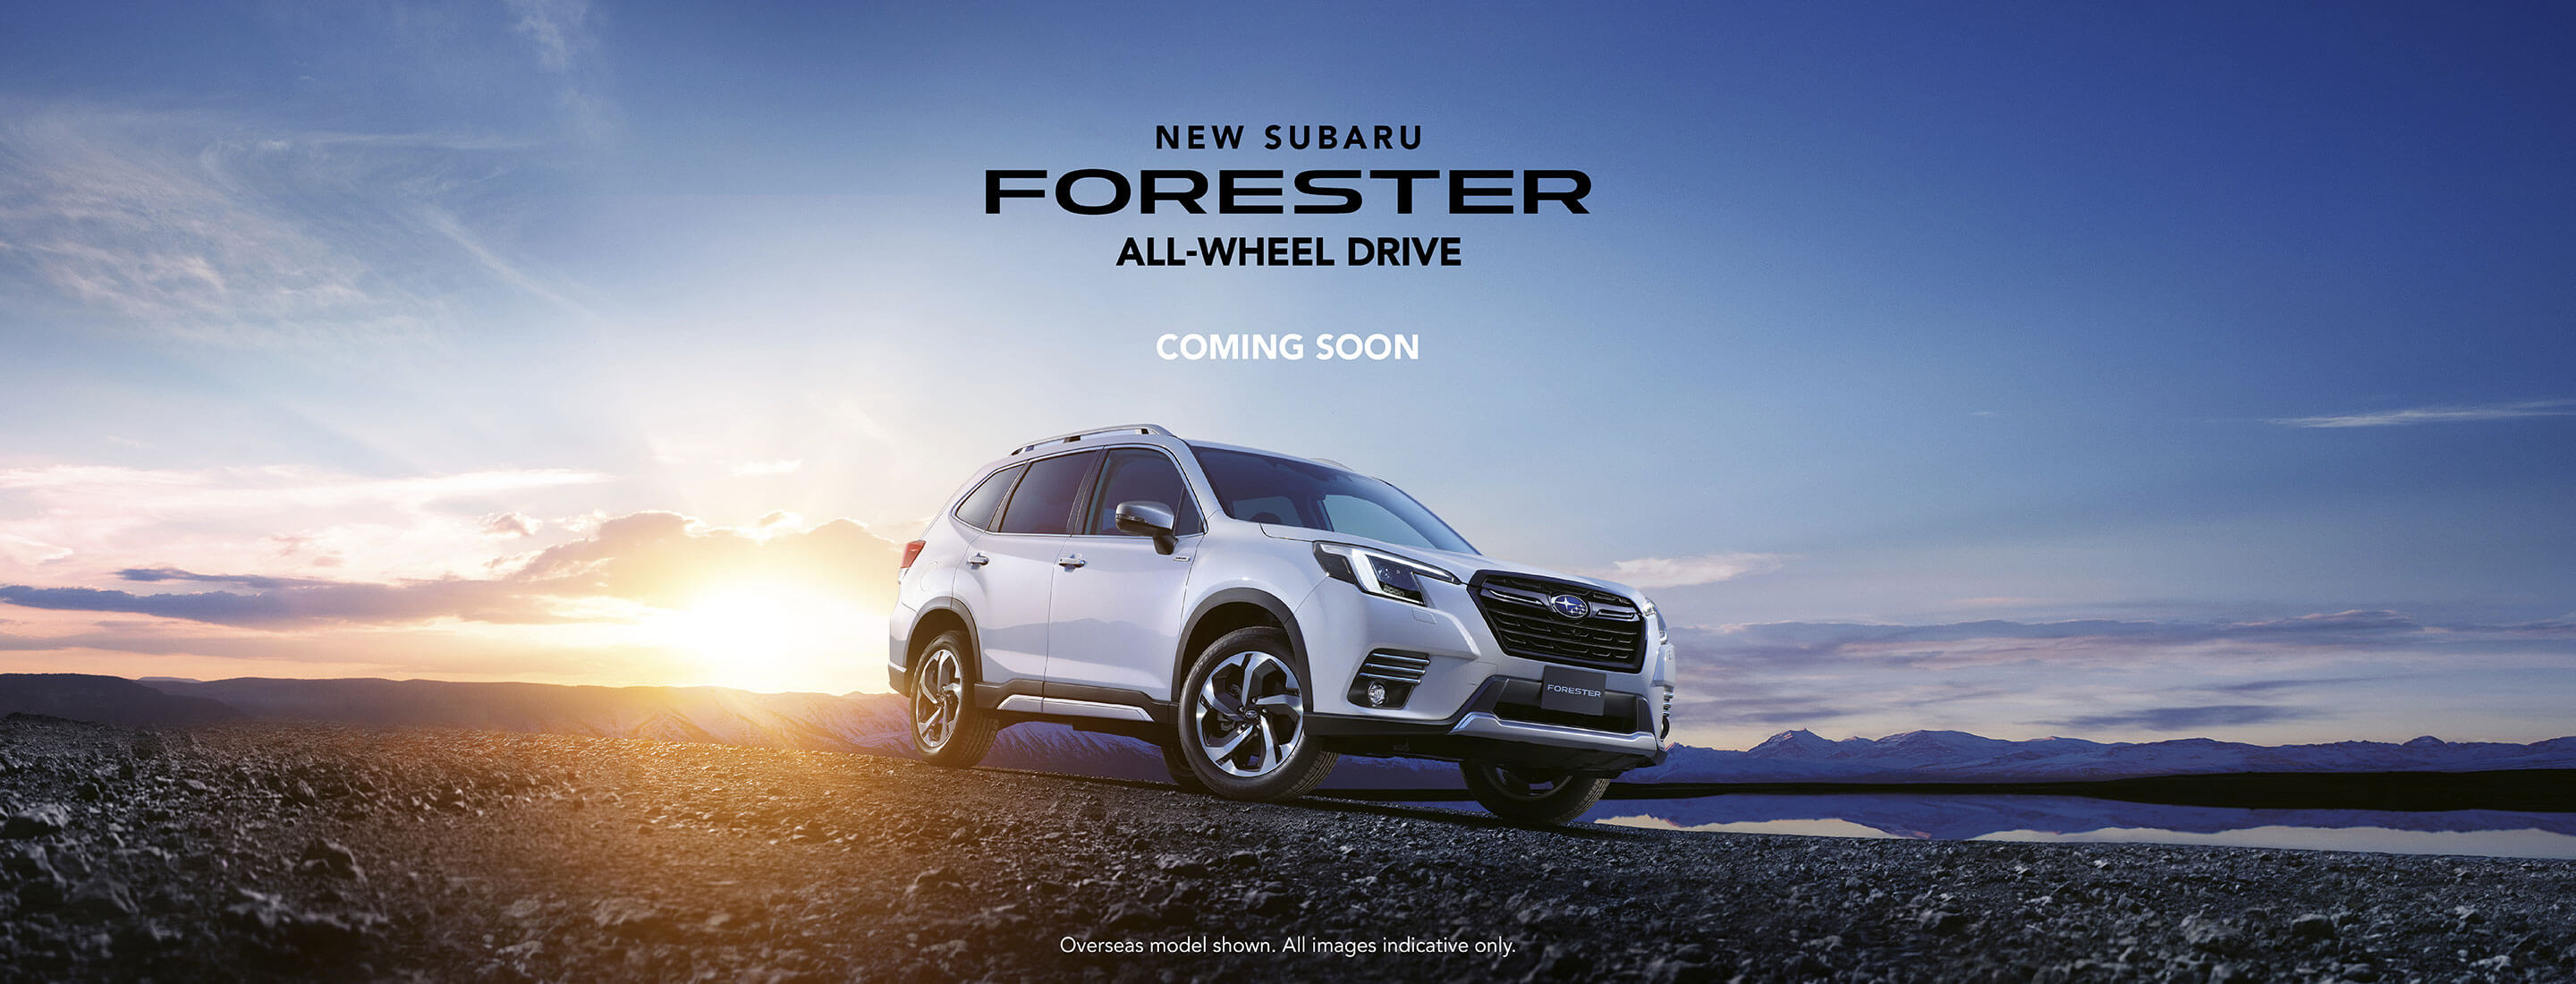 New 2022 Forester Register Your Interest | Subaru Australia